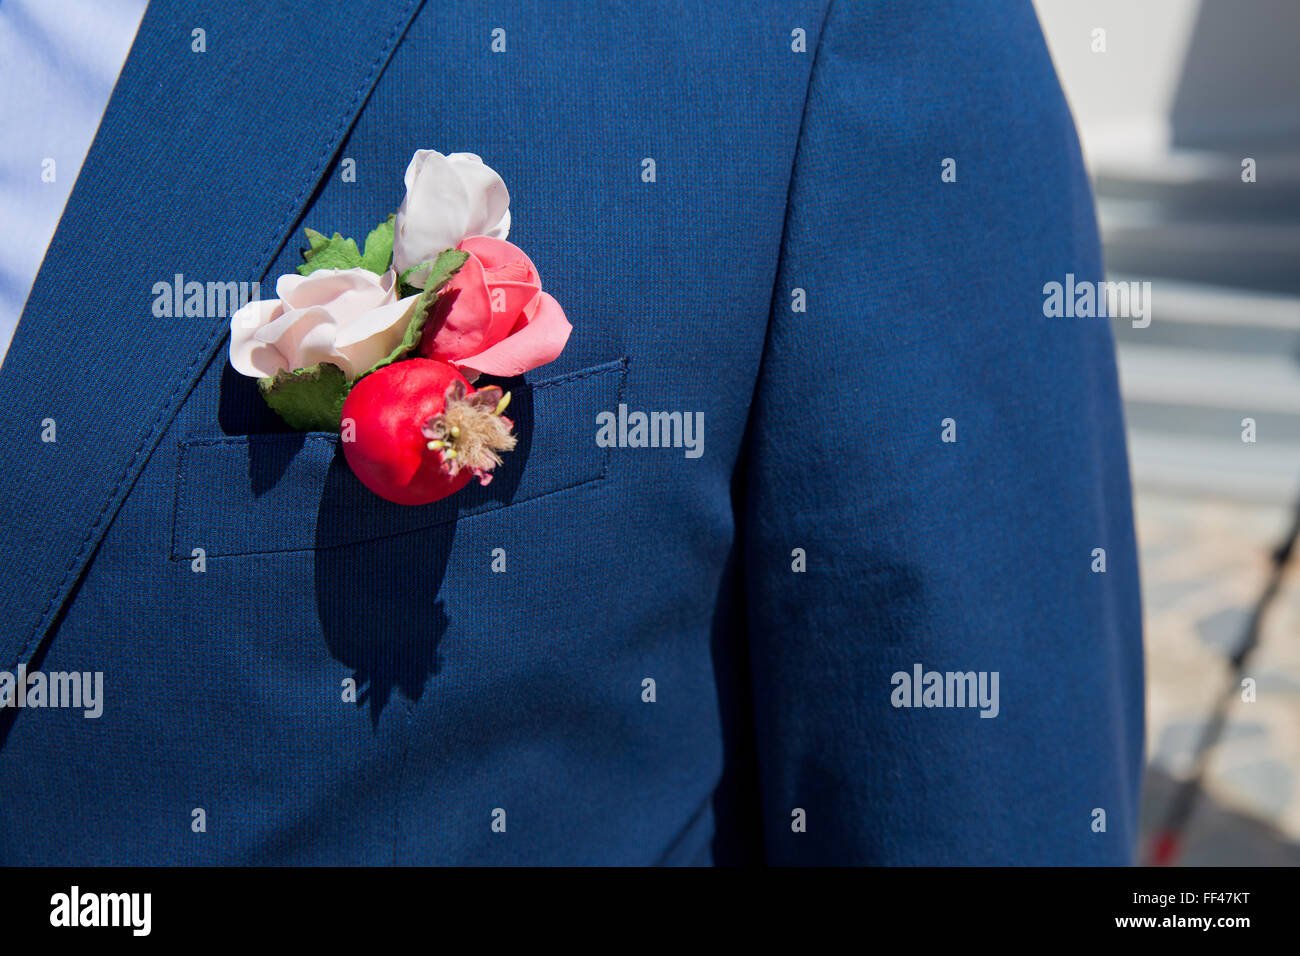 Boutonniere flower on jacket of wedding groom Stock Photo